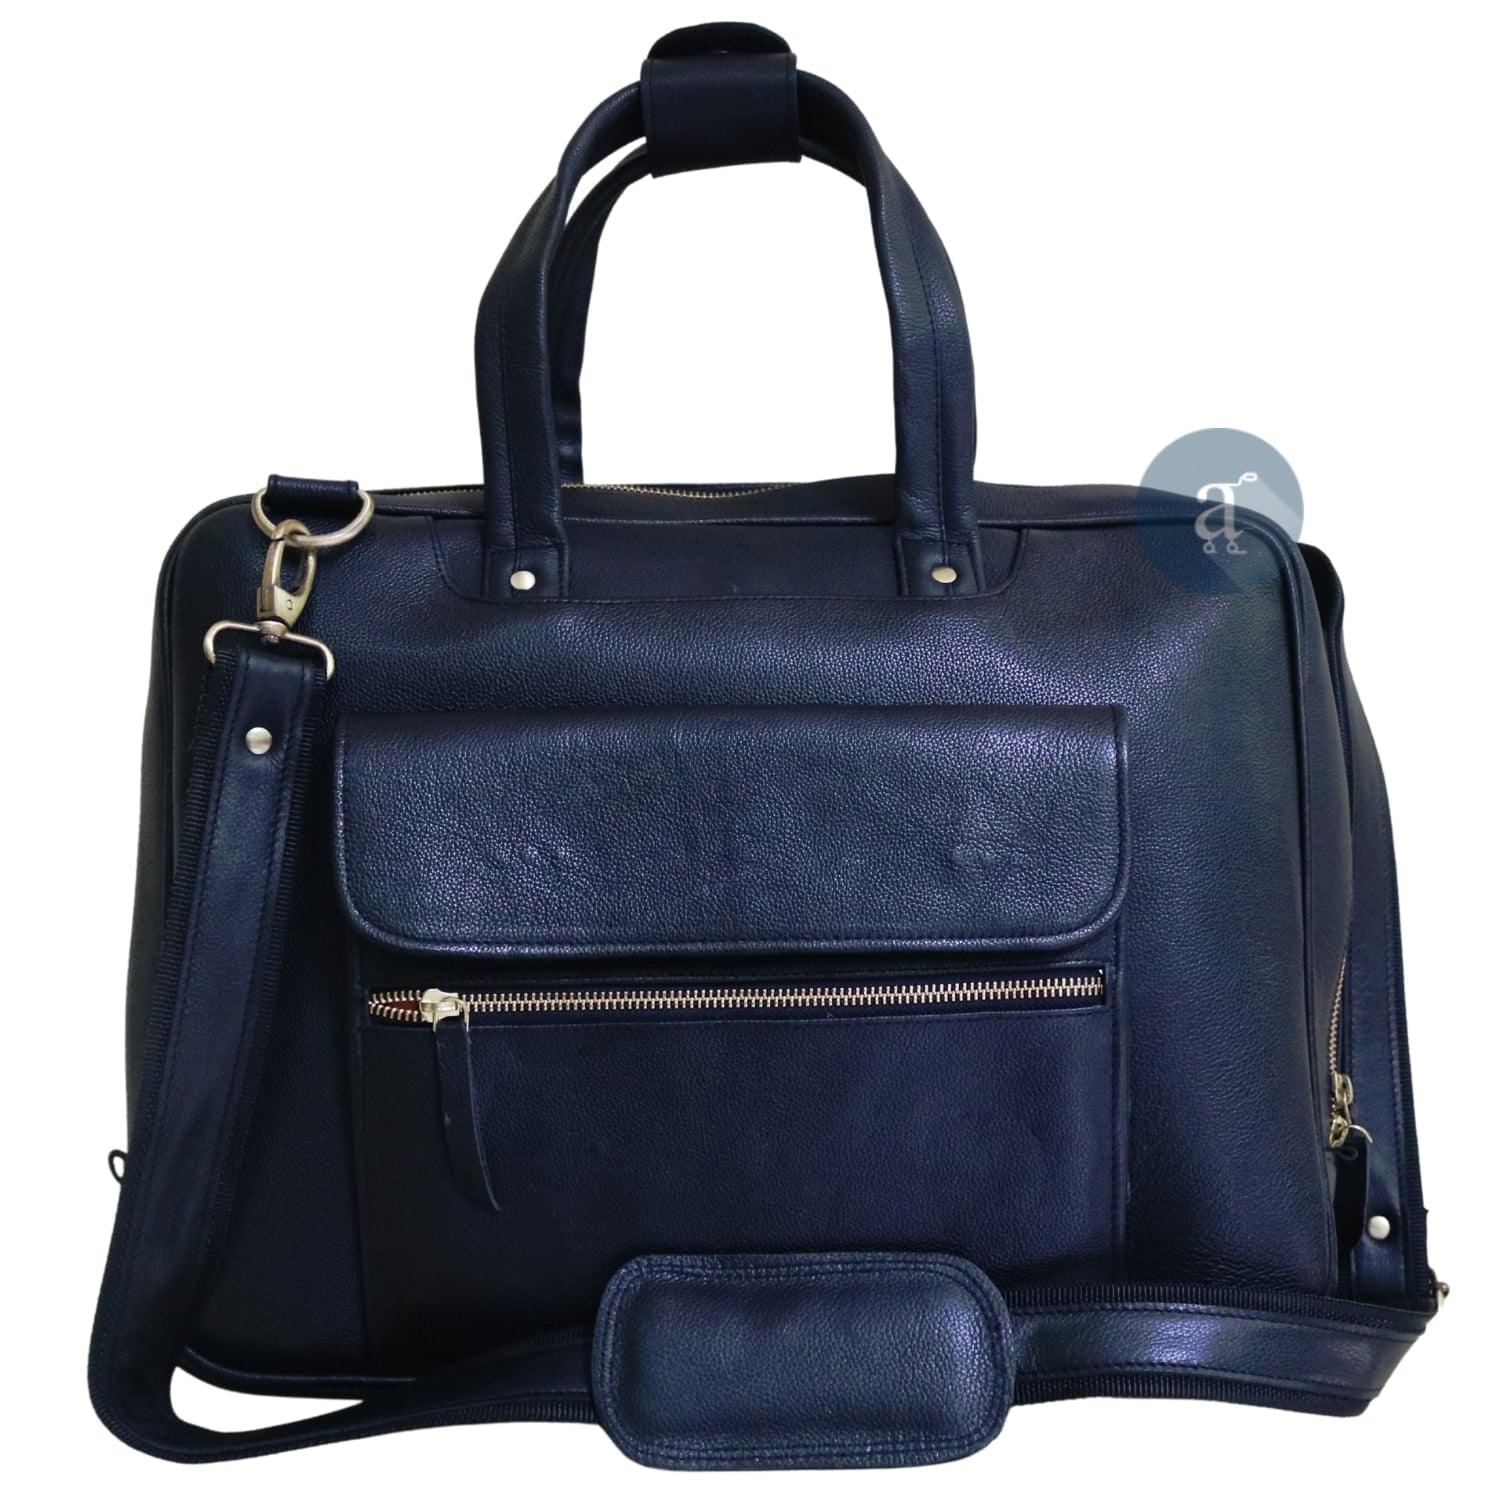 The Ultimate Manifestation of Style and Elegance in the Shoulder Bag